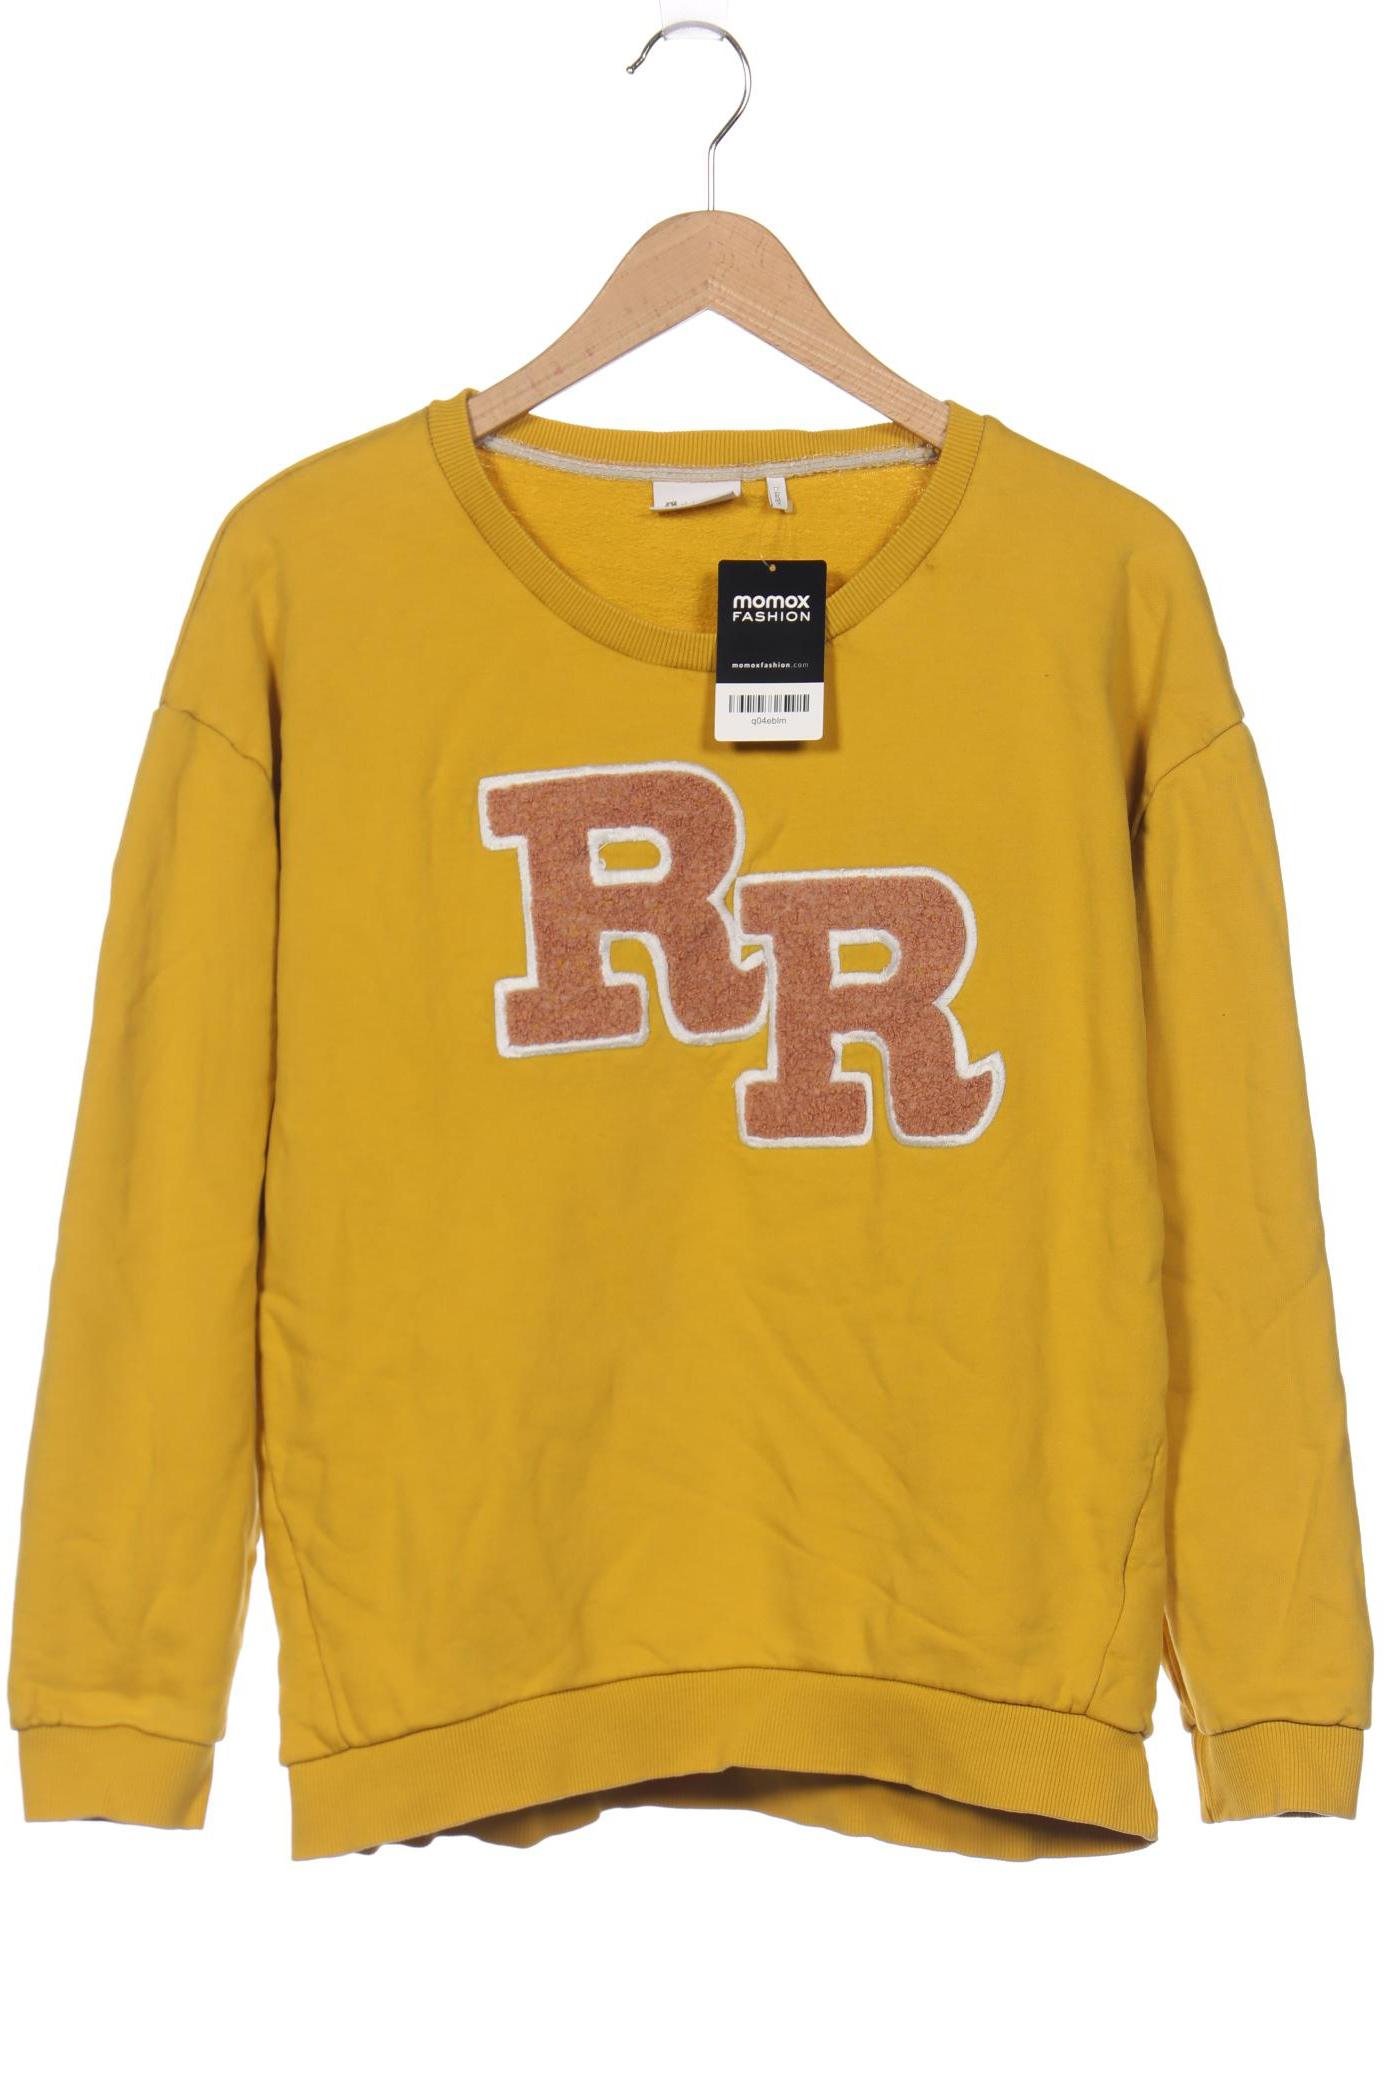 Rich & Royal Damen Sweatshirt, gelb von Rich & Royal